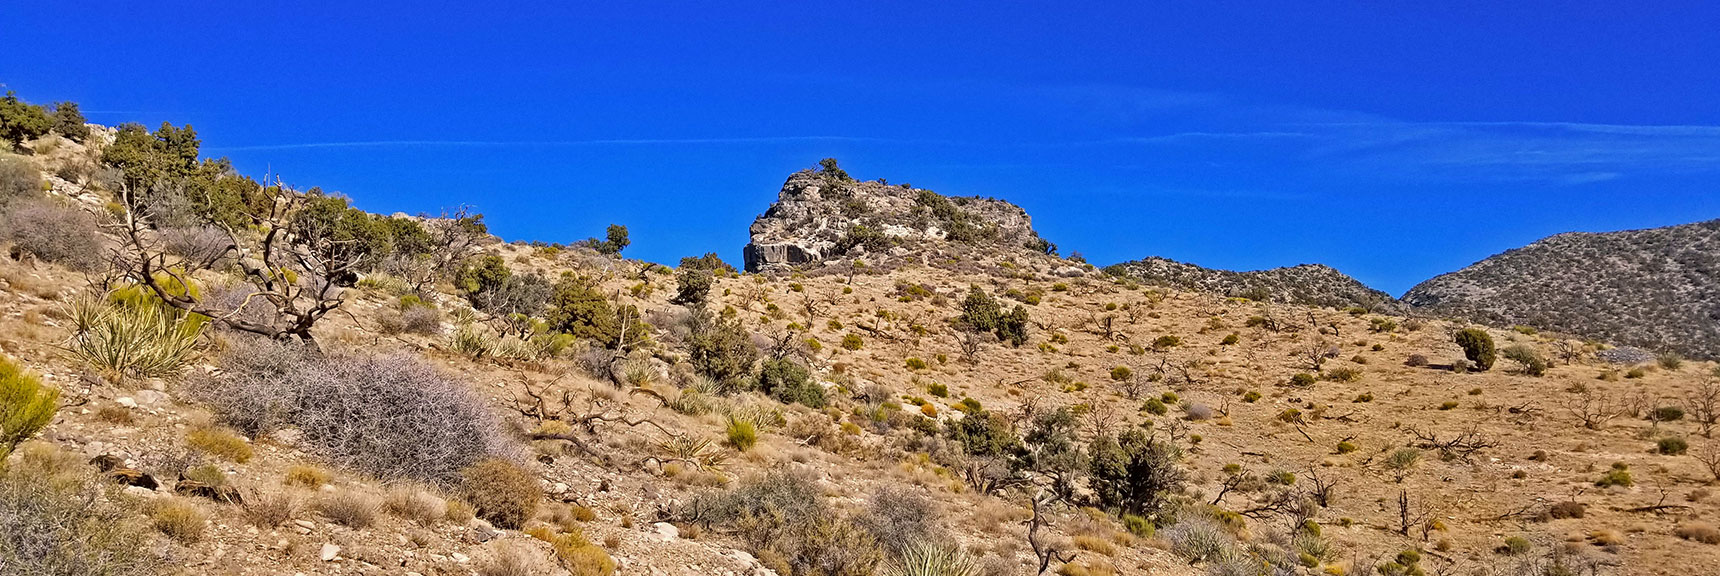 Rounding the Second Bluff and Heading Toward the Third Bluff | Potosi Mt. Summit via Western Cliffs Ridgeline, Spring Mountains, Nevada